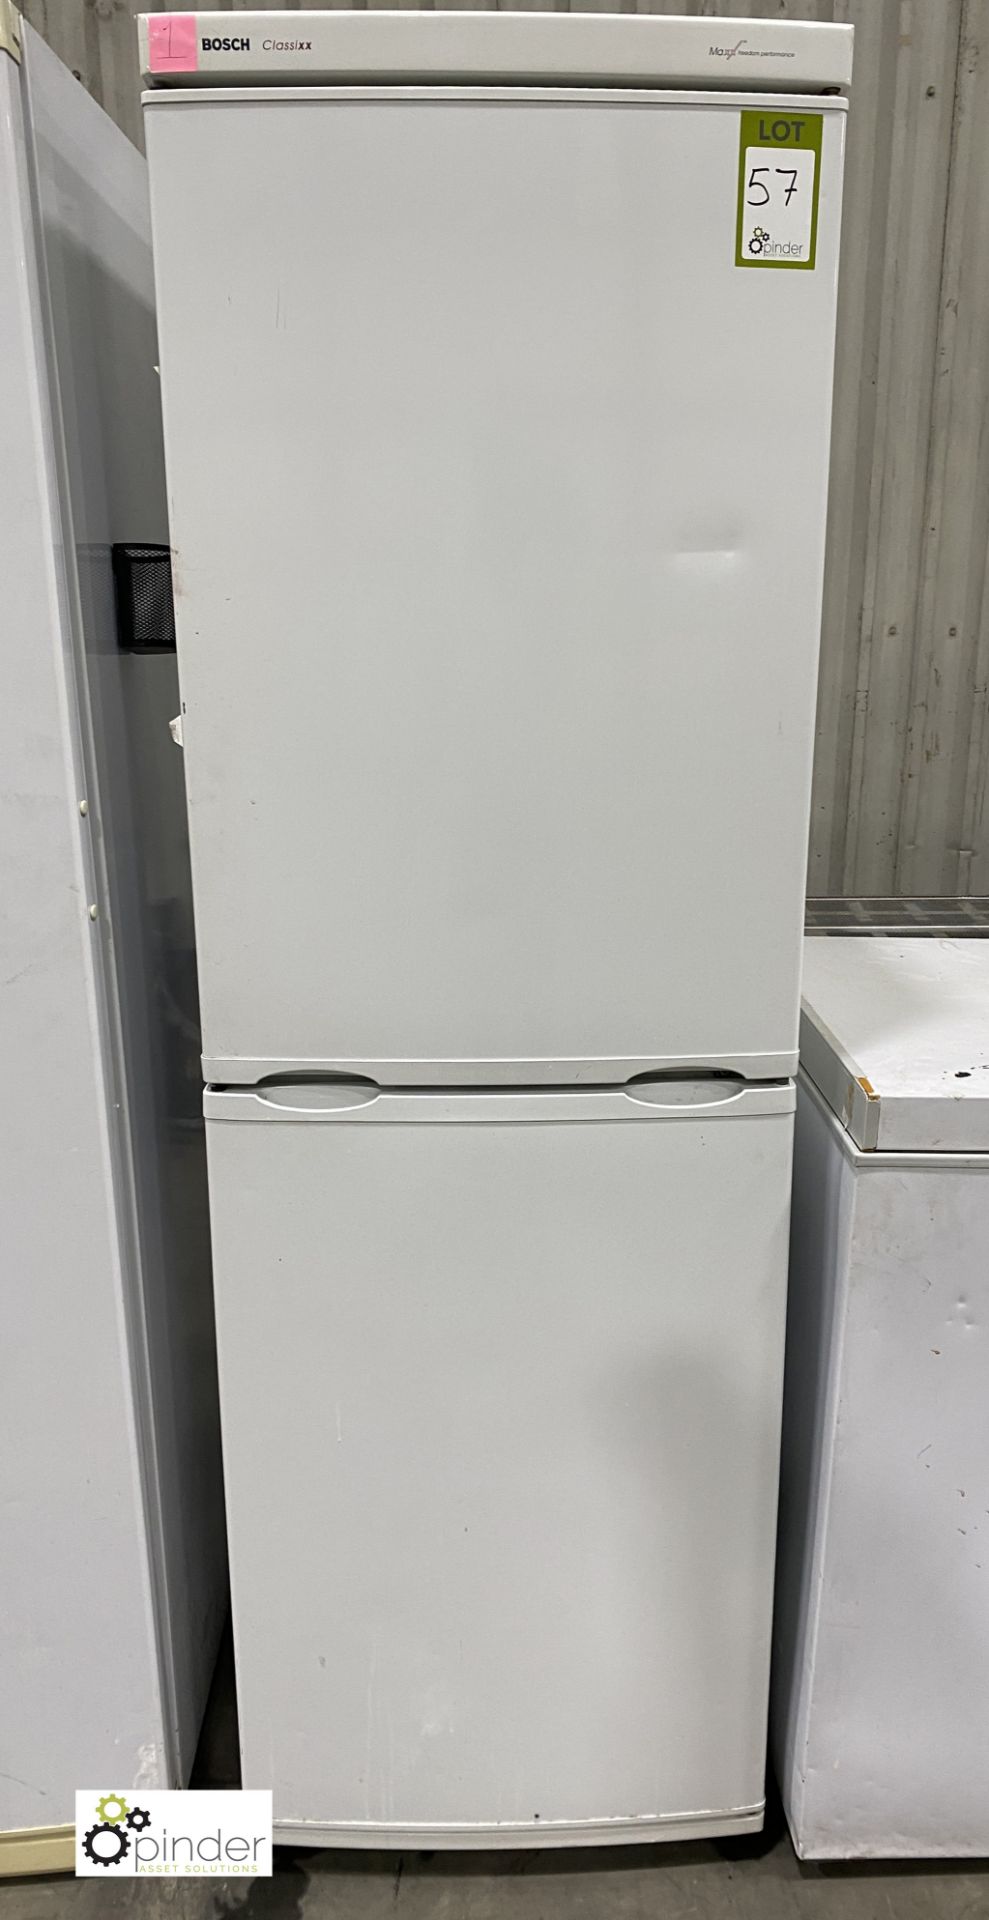 Bosch Classixx full height Fridge Freezer